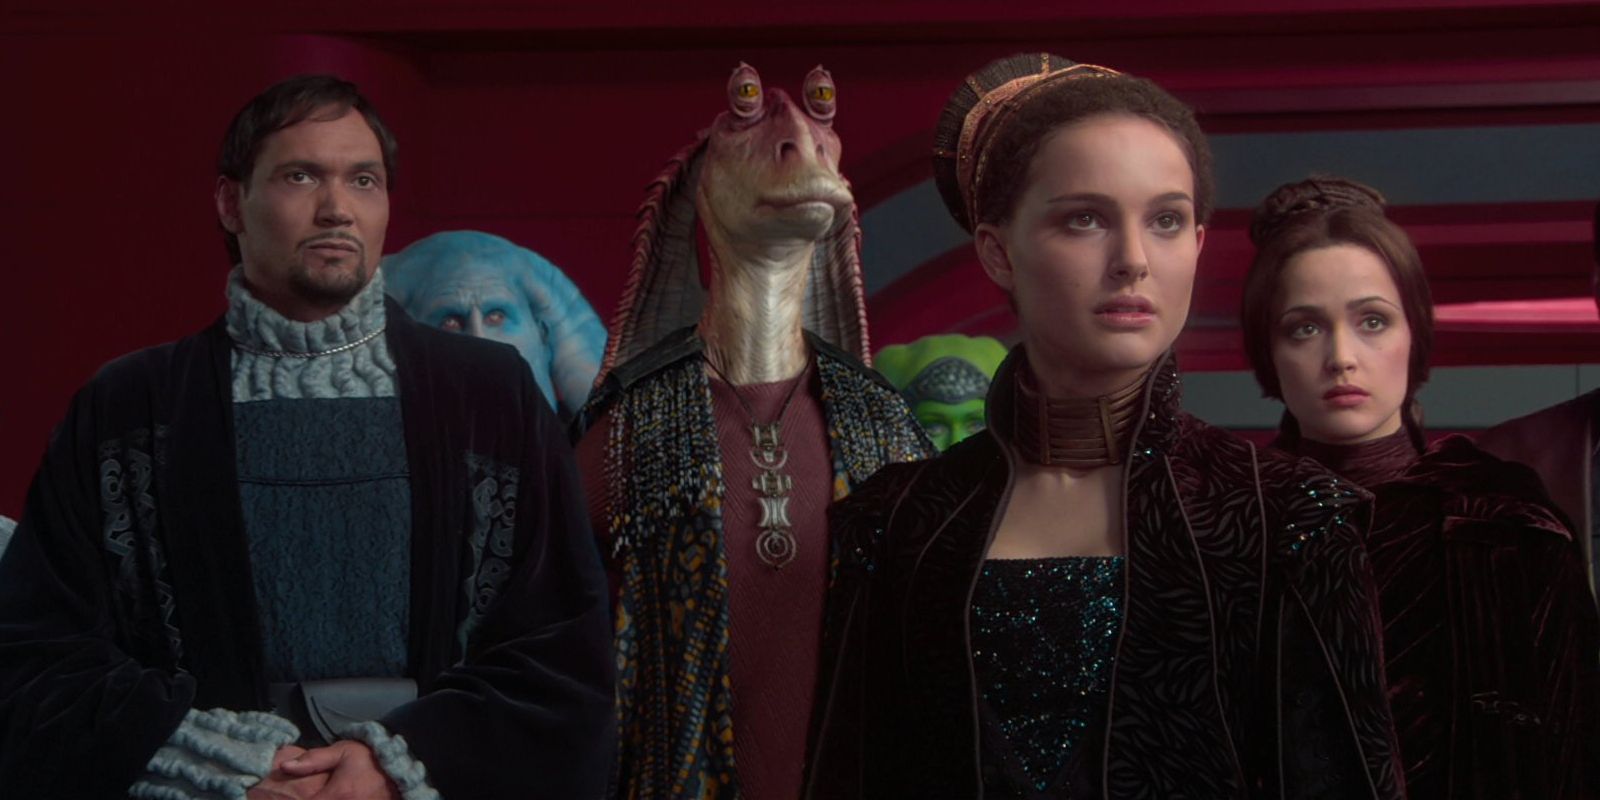 Jar Jar Binks (Ahmed Best), Senator Organa (Jimmy Smits), and Padme Amidala (Natalie Portman) look to plead their case in the senate in Star Wars